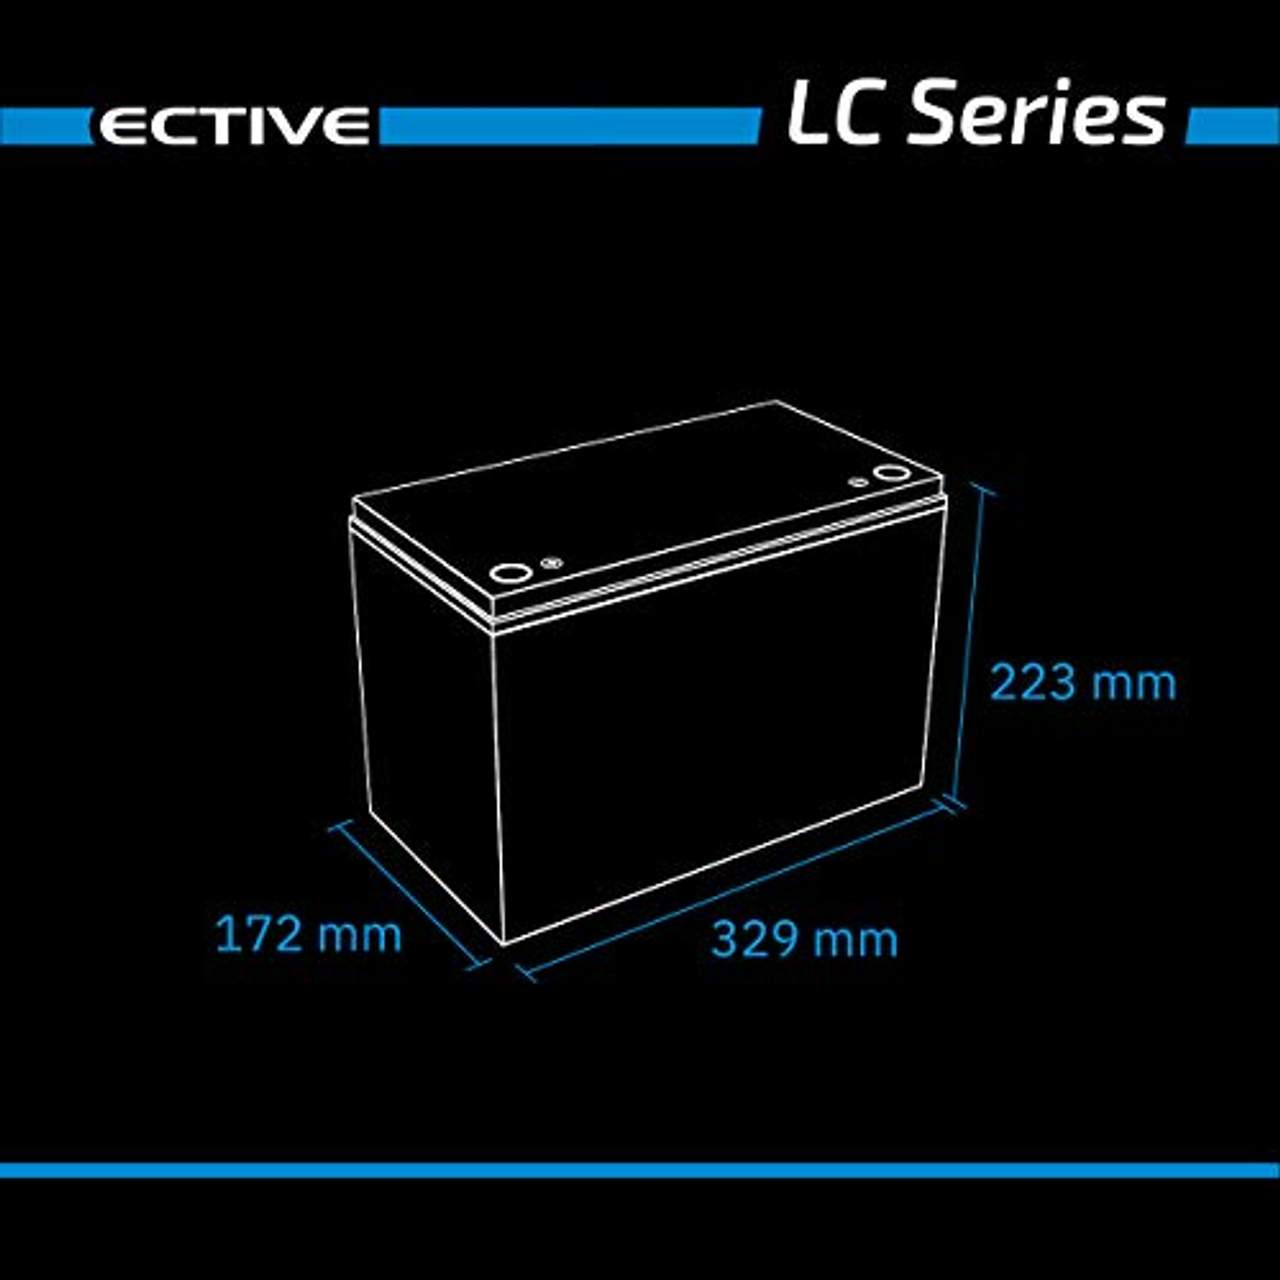 ECTIVE LC100L 12V 100Ah 1280Wh LiFePo4 Lithium-Eisenphosphat  